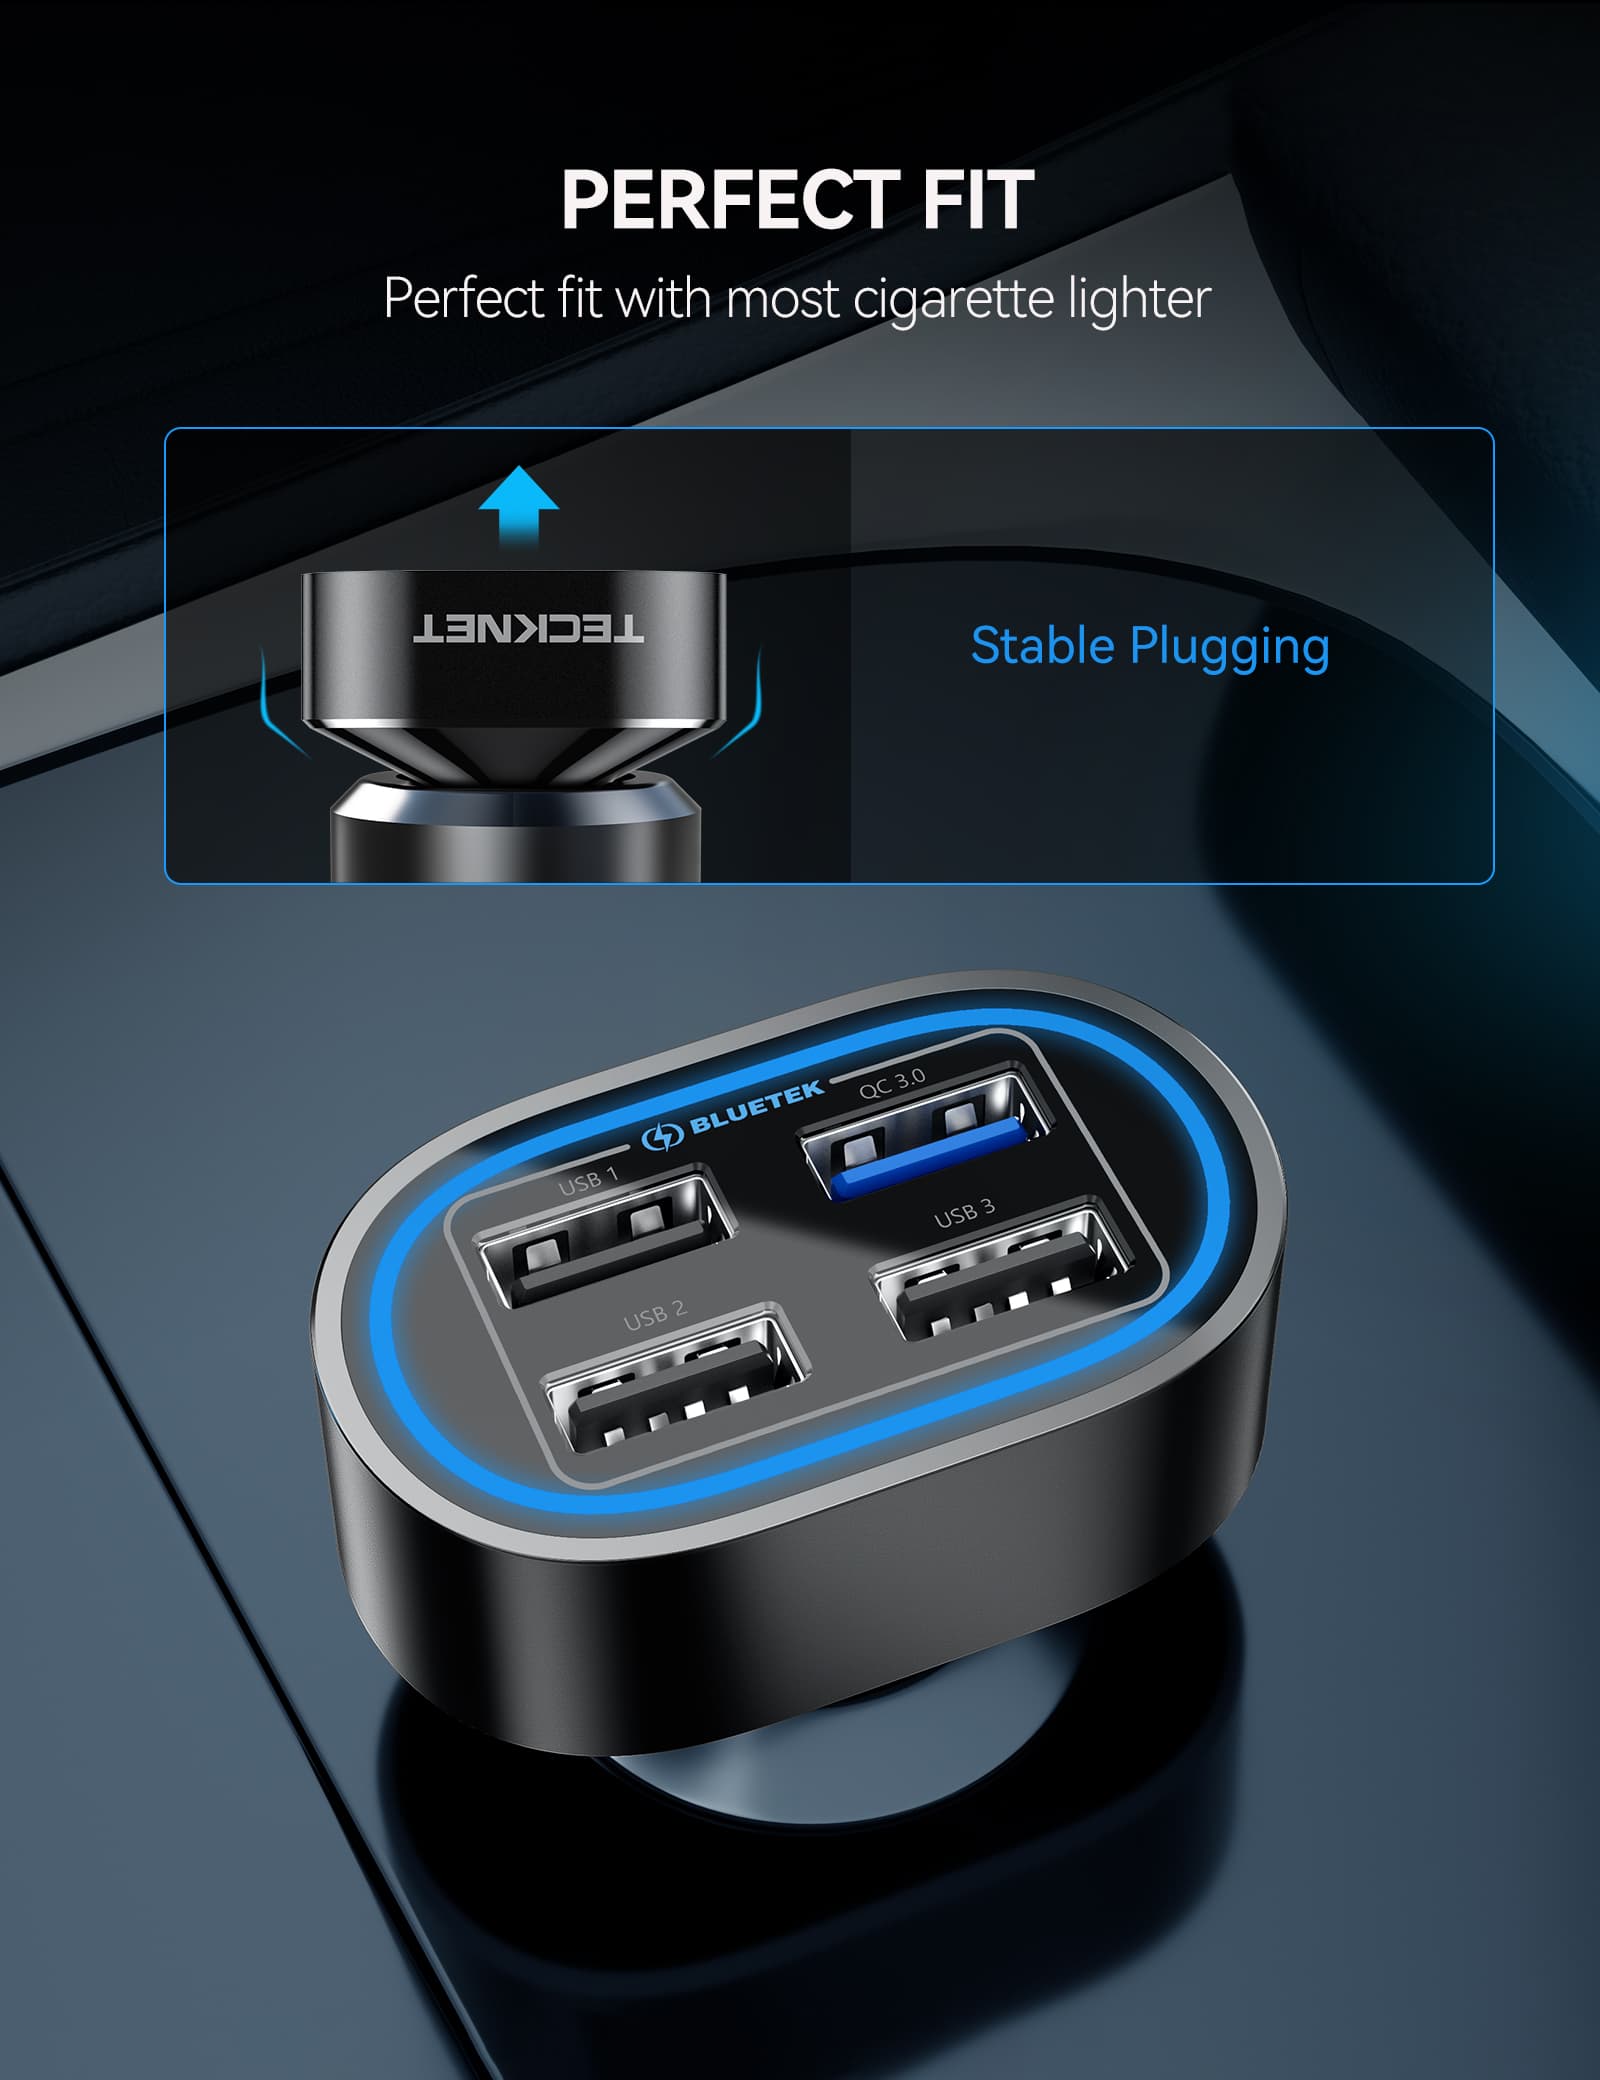 TECKNET USB Car Charger 54W 4-Port USB Car Charger